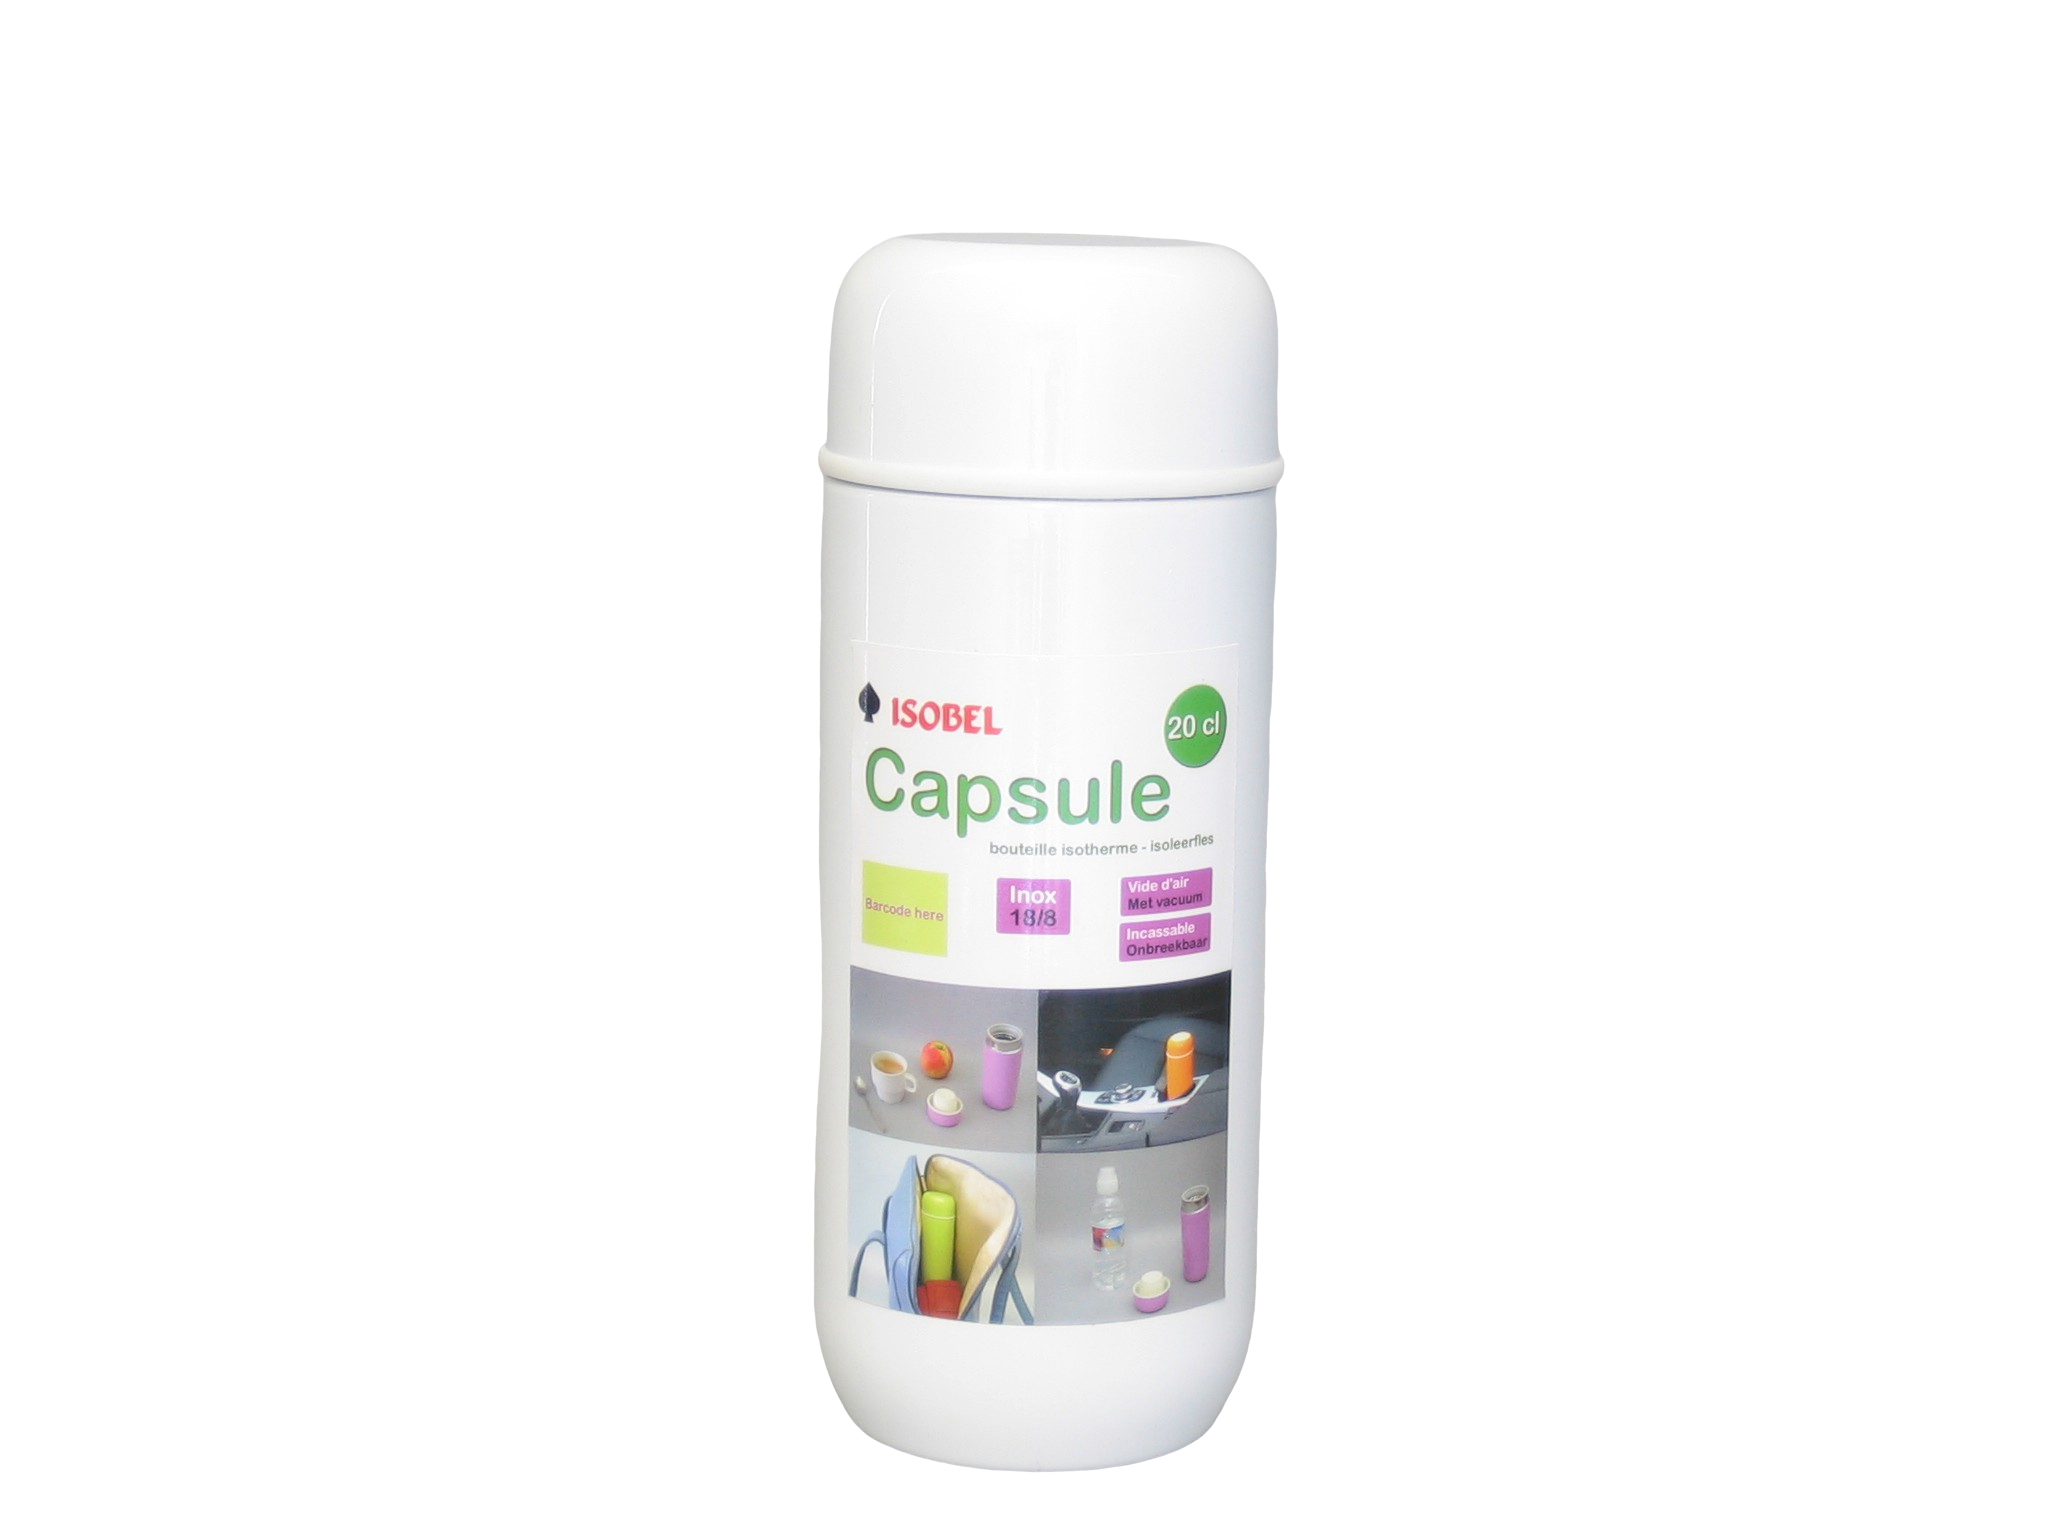 CAPSULE-001 - Vacuum flask SS unbreakable white 0.20 L - Isobel